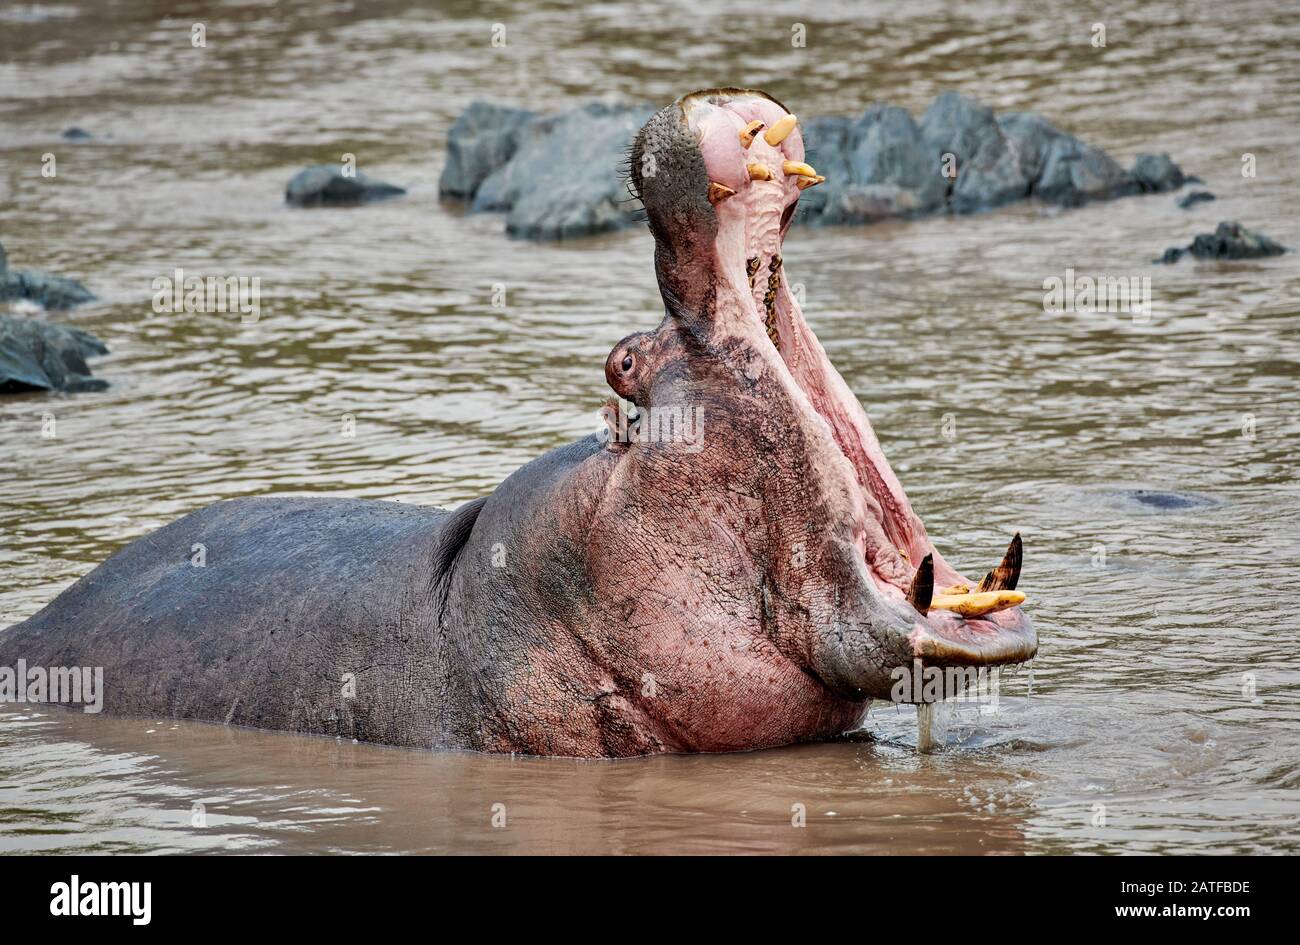 Gähnender Hippo mit riesigen Zähnen (Hippopotamus amphibius) im berühmten Hippo-Pool des Serengeti-Nationalparks, UNESCO-Weltkulturerbe, Tansania, Afrika Stockfoto